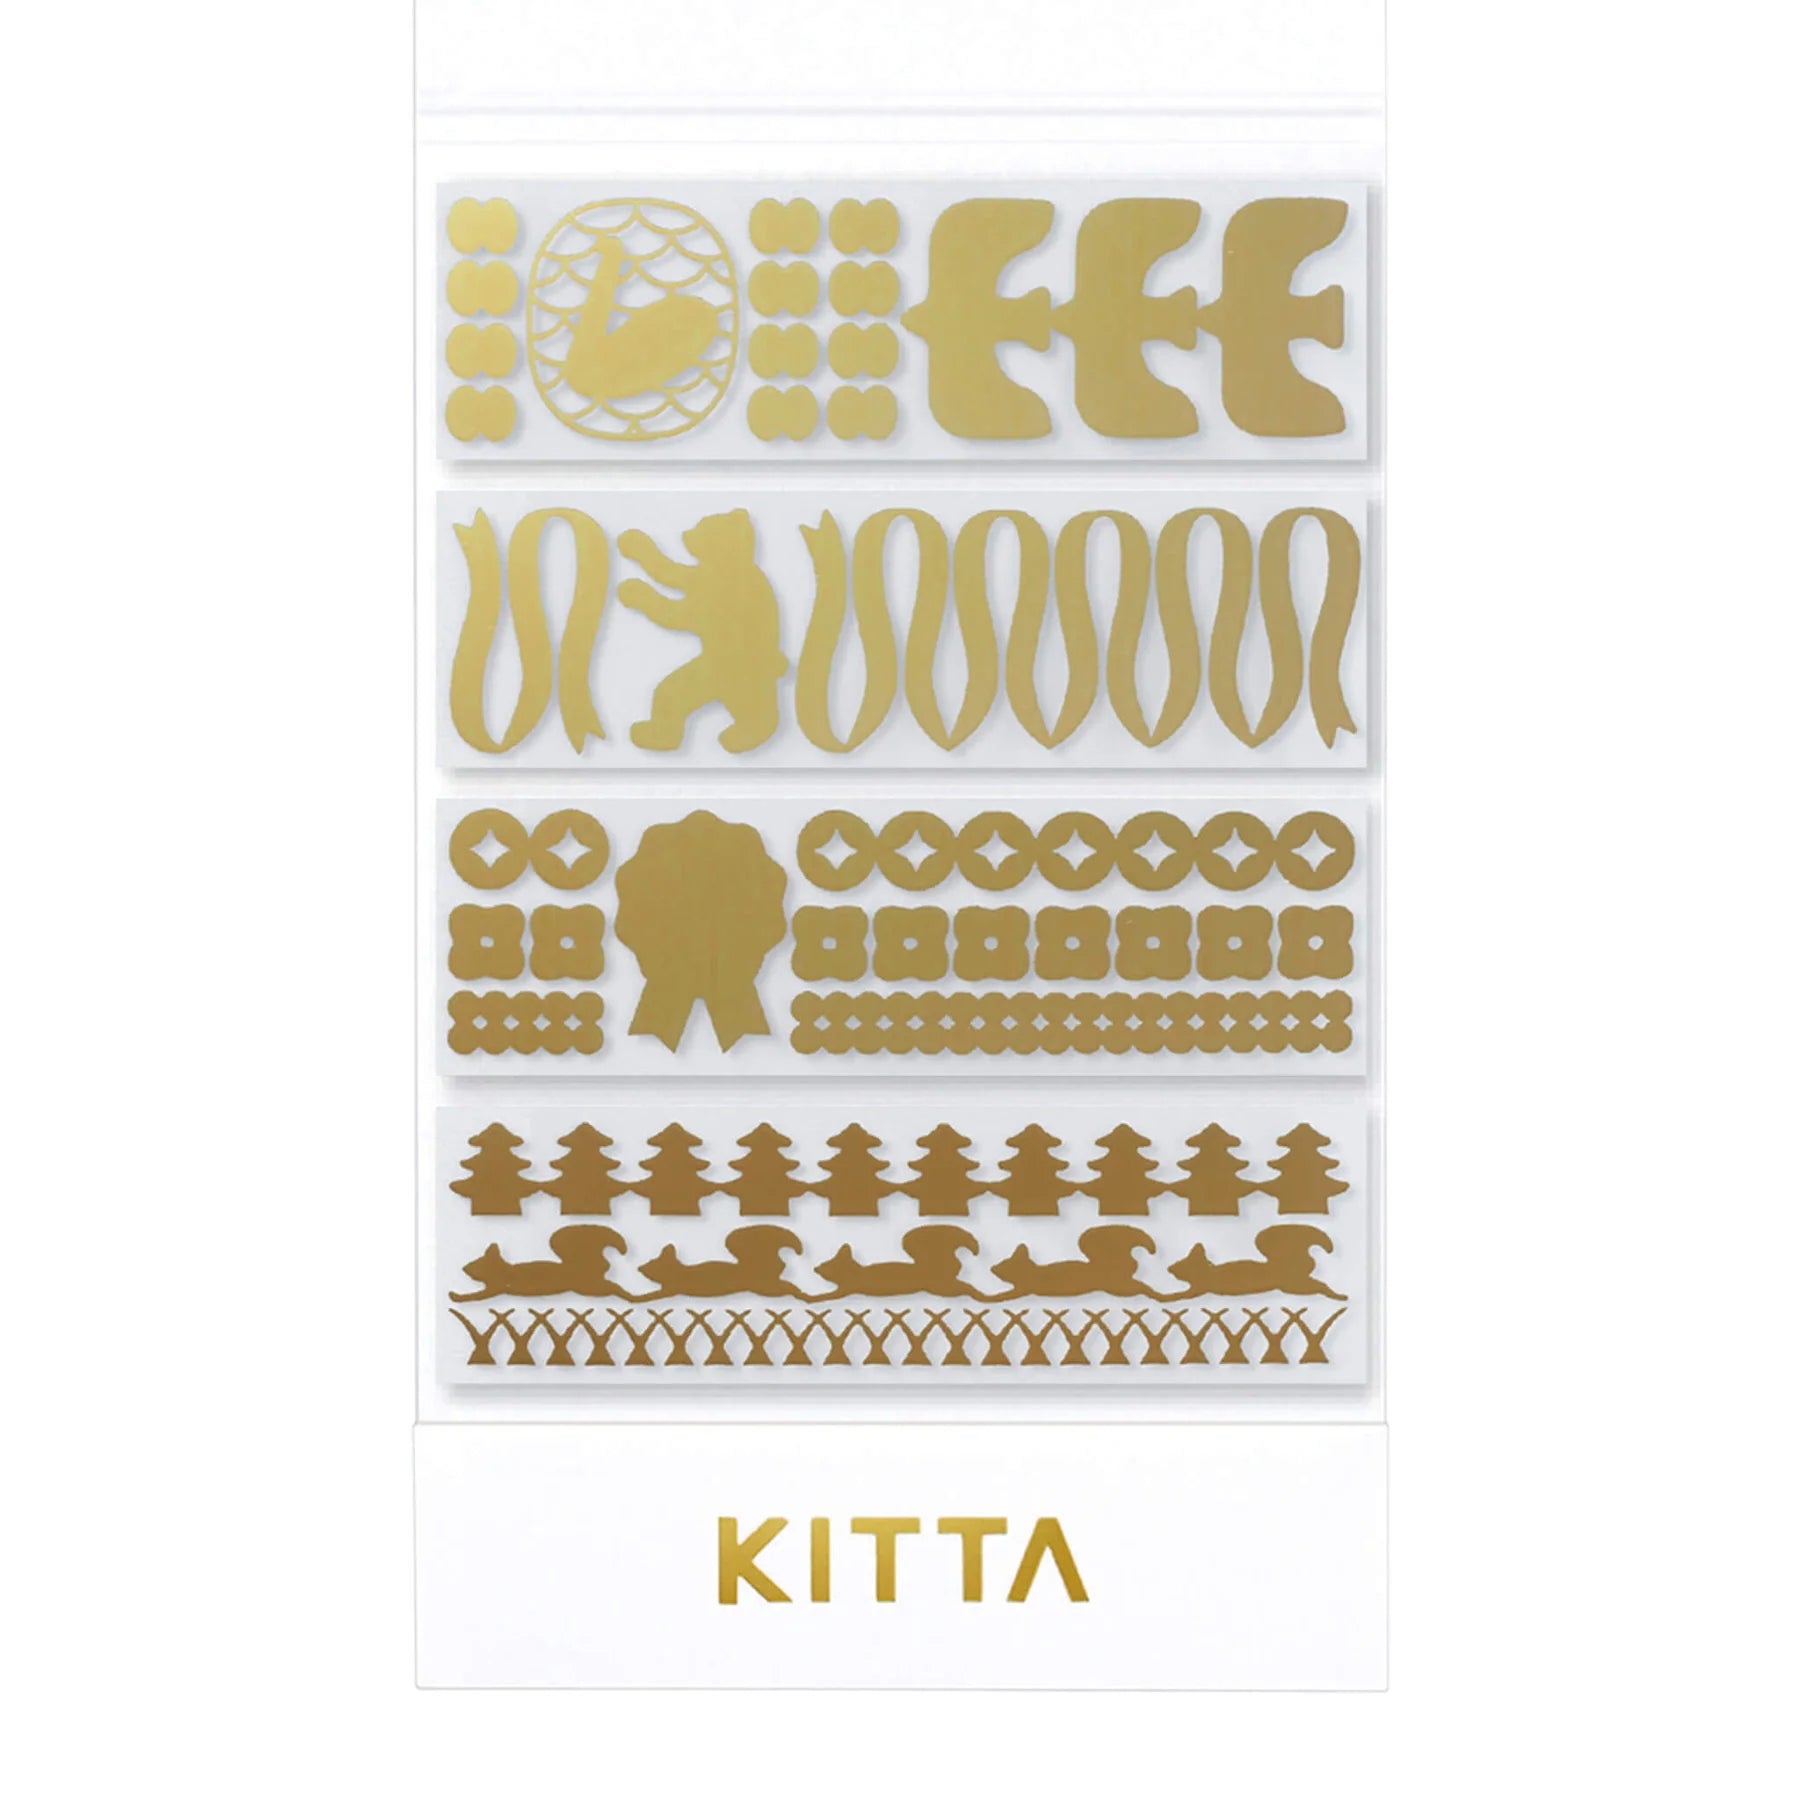 Gold Lace Washi Tape Sample Taiwanese Stationery Artist